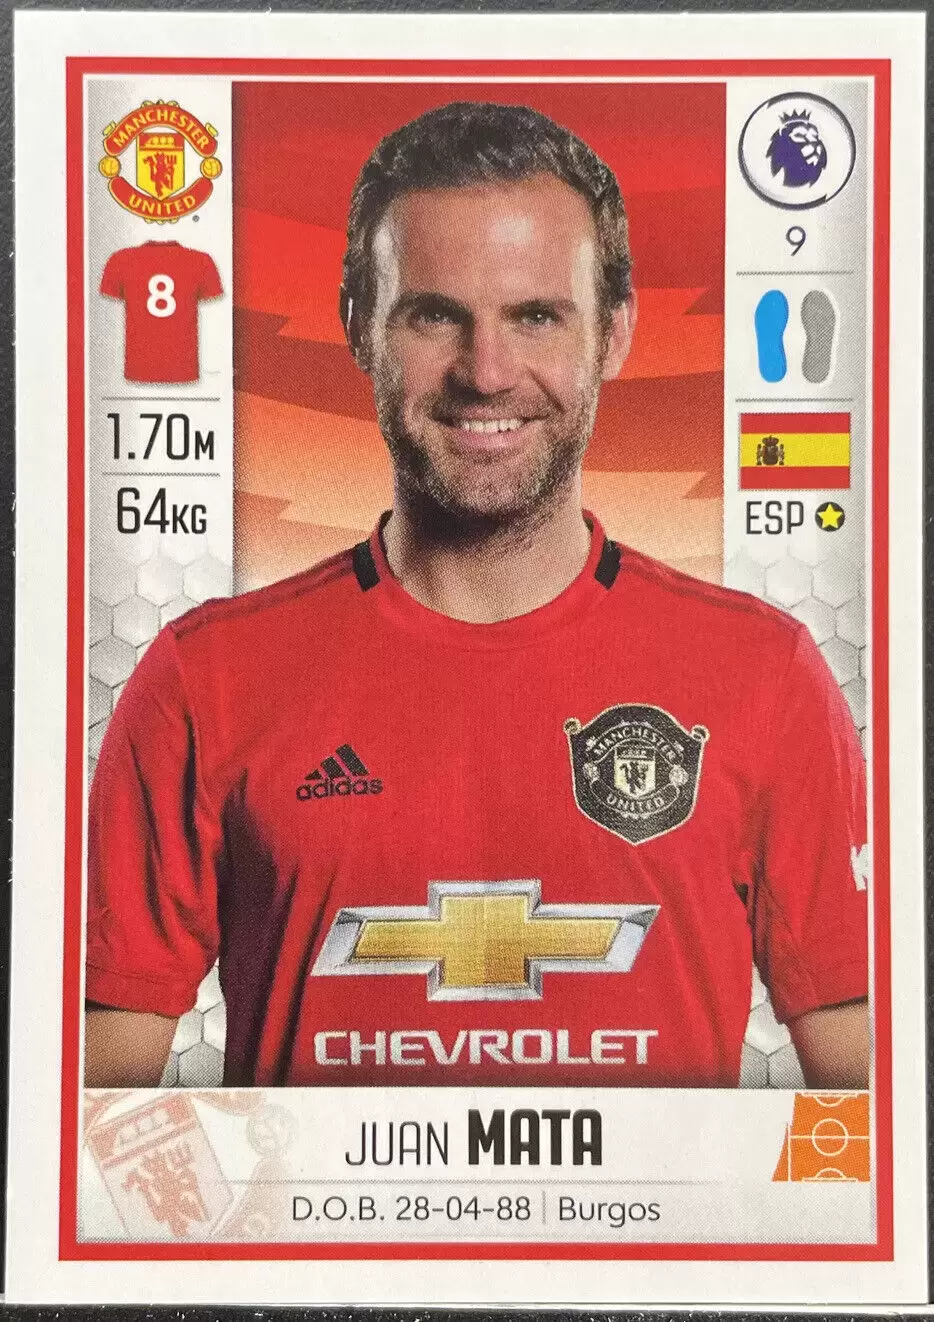 Premier League 2020 - Juan Mata - Manchester United